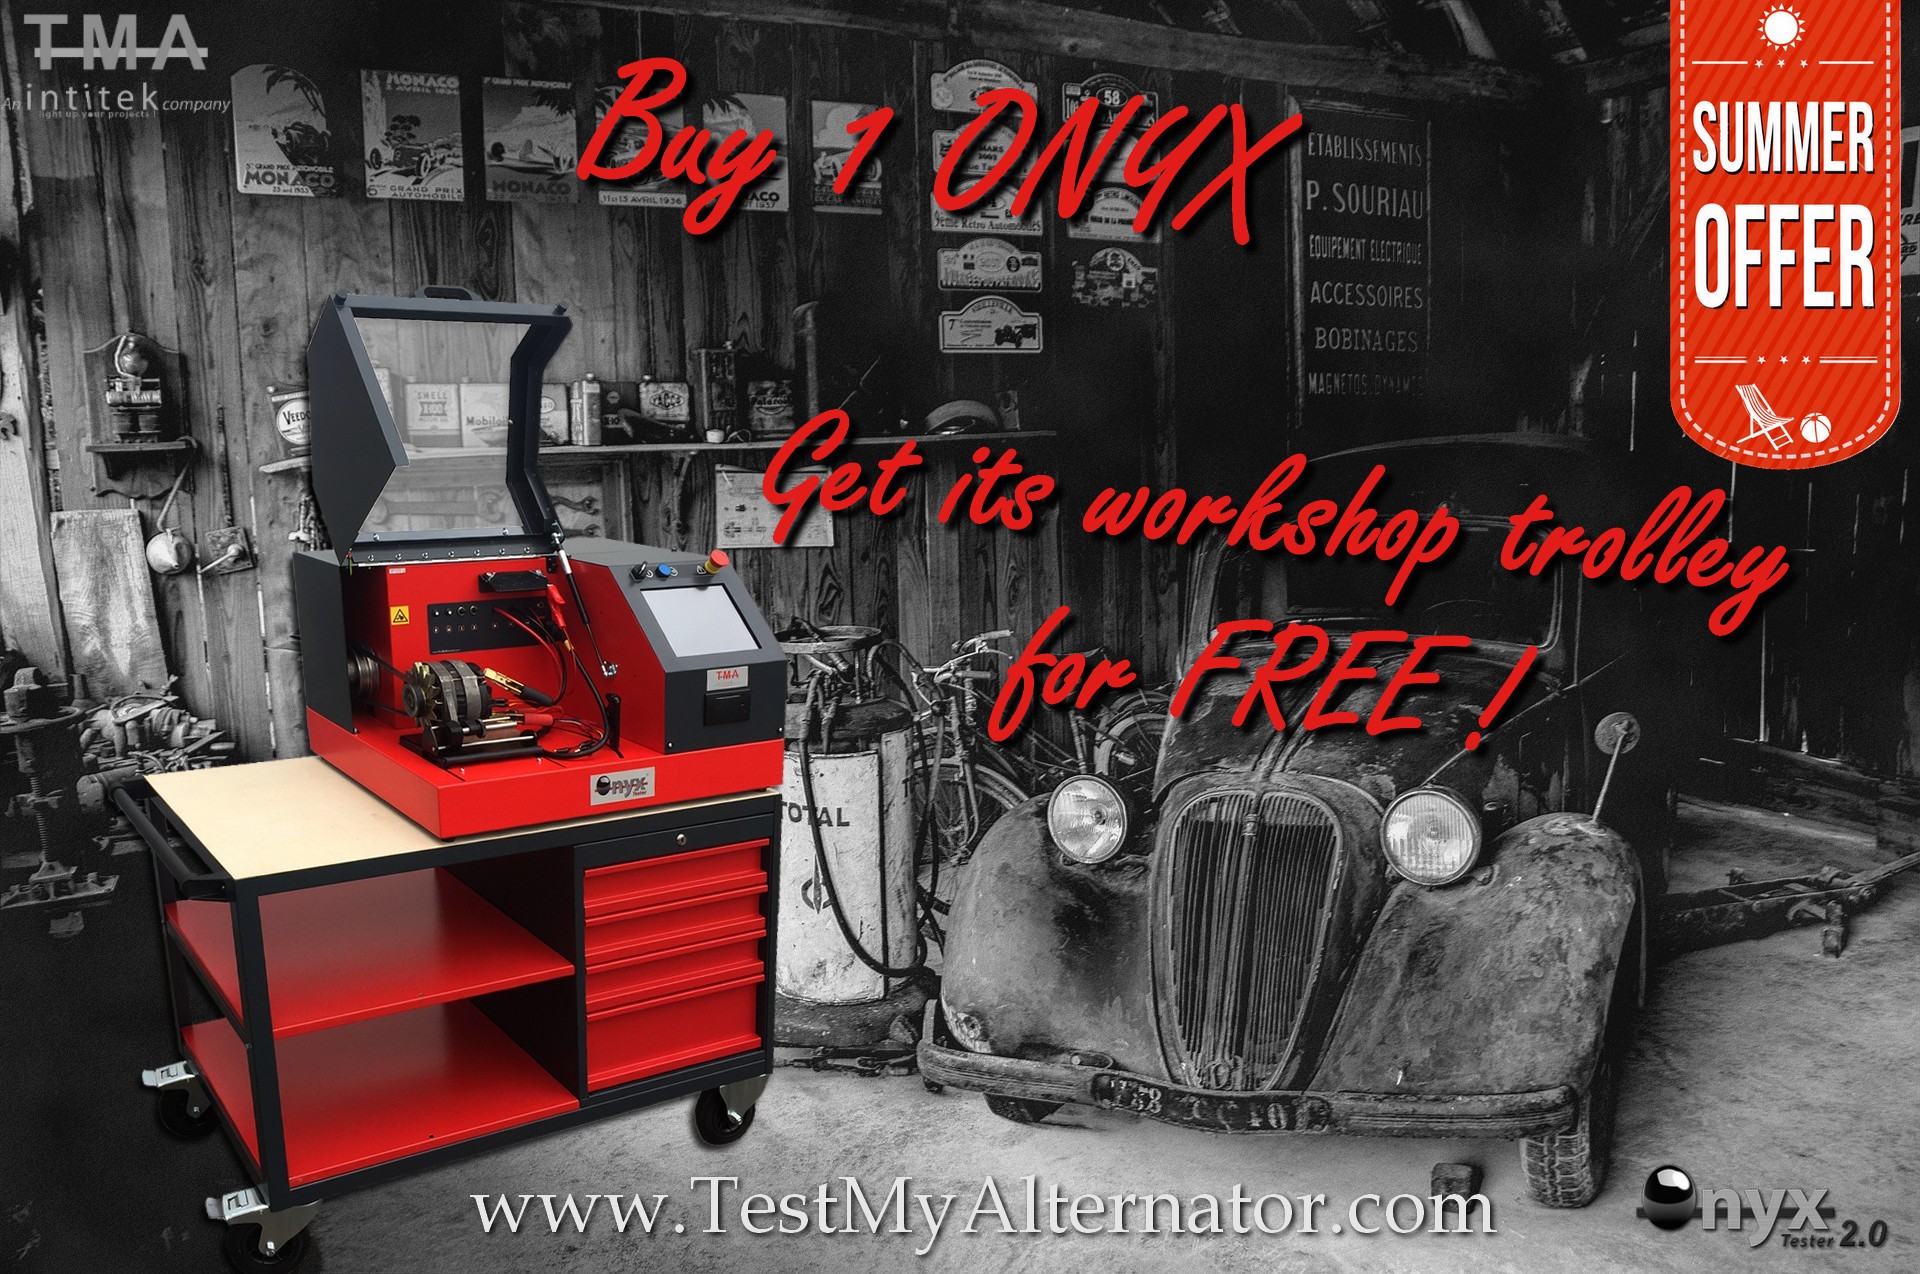 Buy ONYX Get workshop trolley